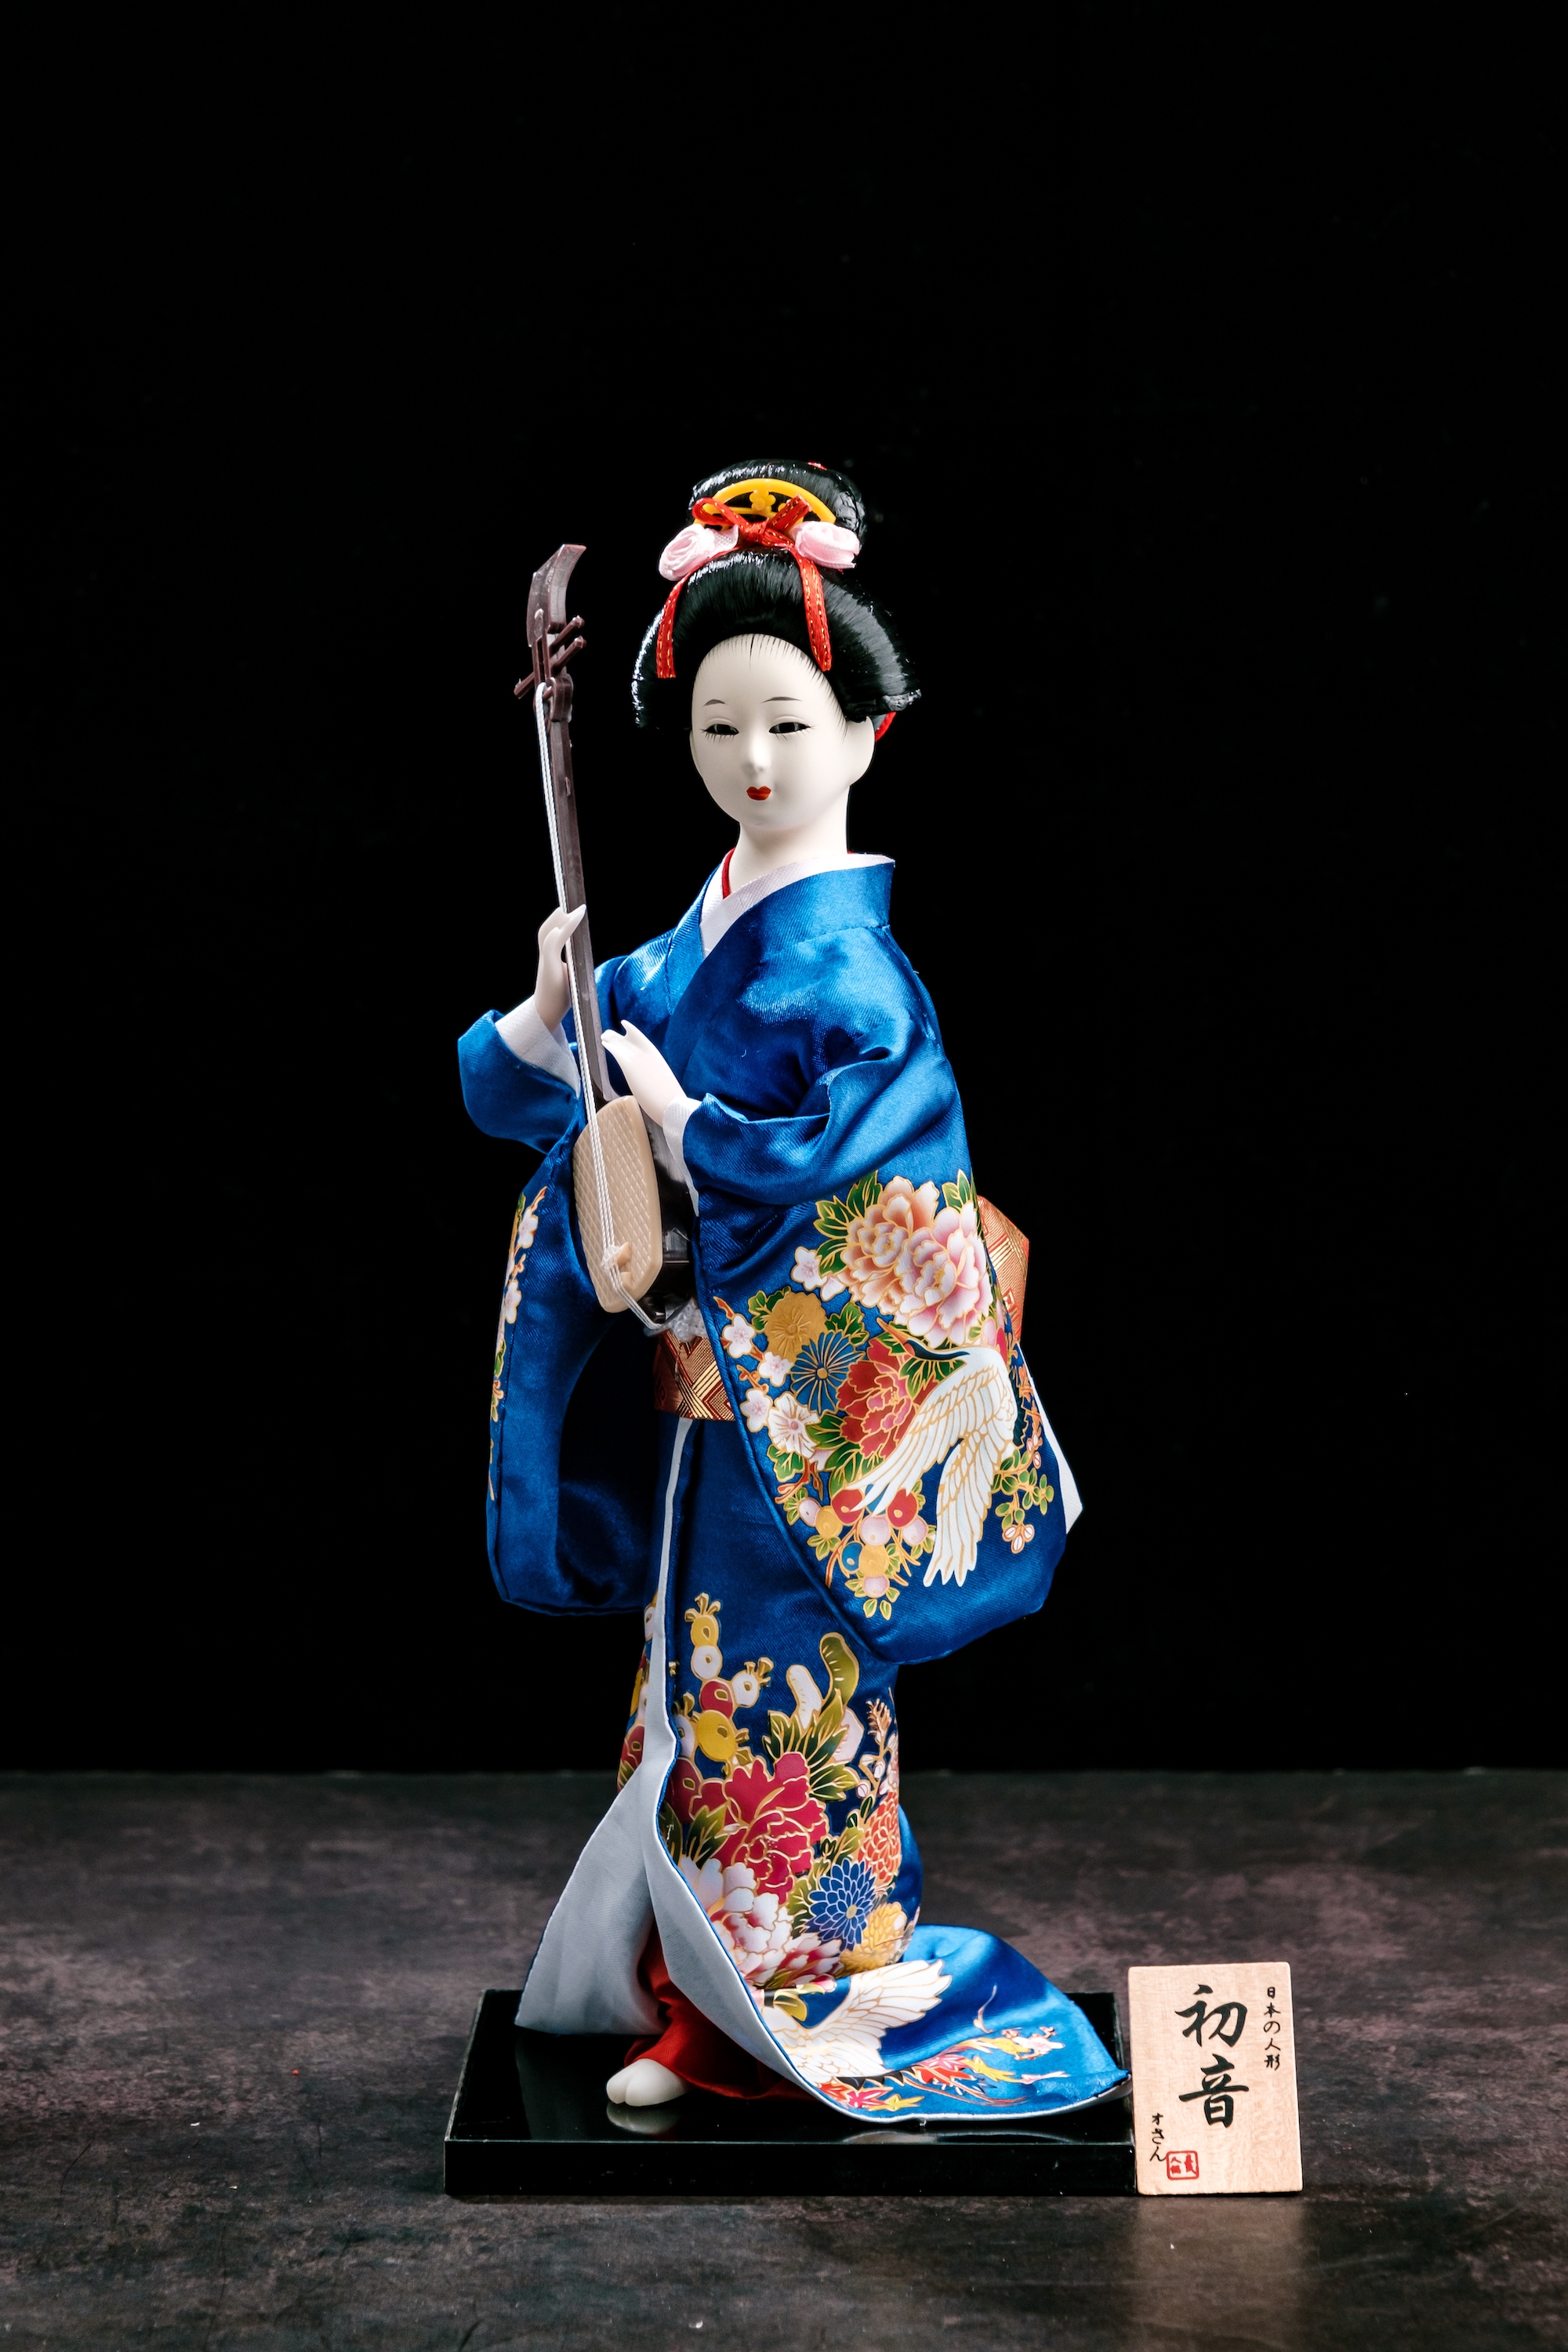 Kokeshi doll bloom - Kokeshi doll - Nishikidôri